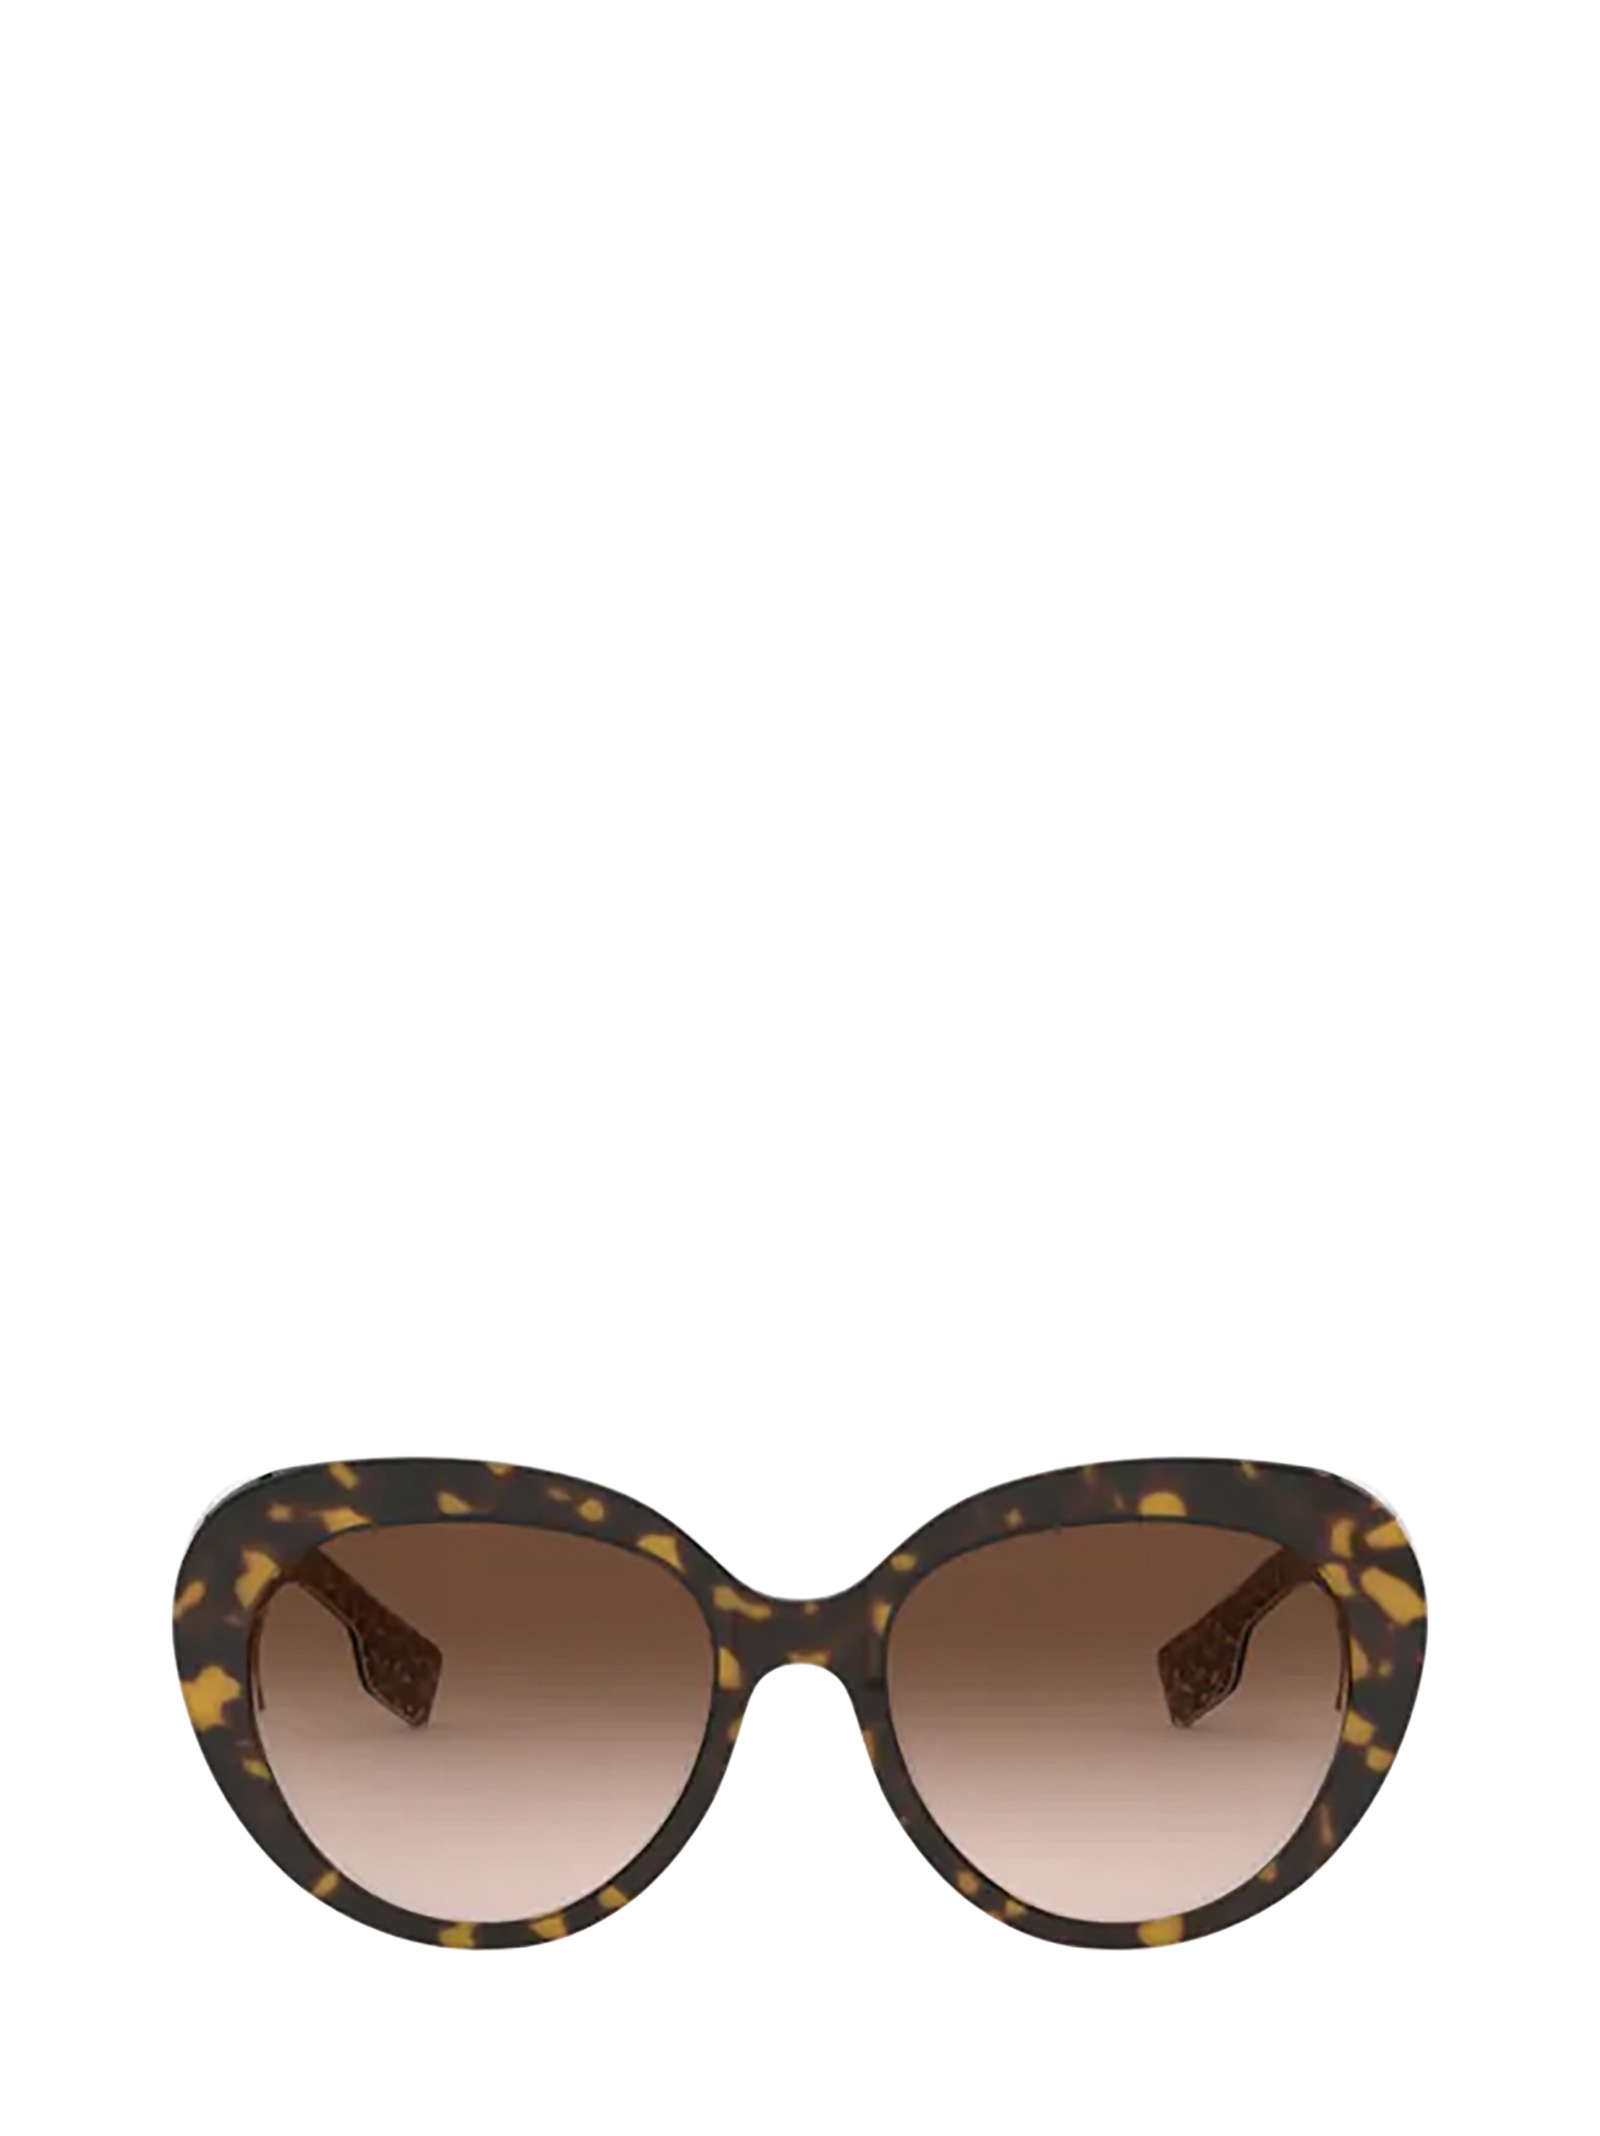 Burberry Burberry Be4298 Top Dark Havana On Tb Brown Sunglasses